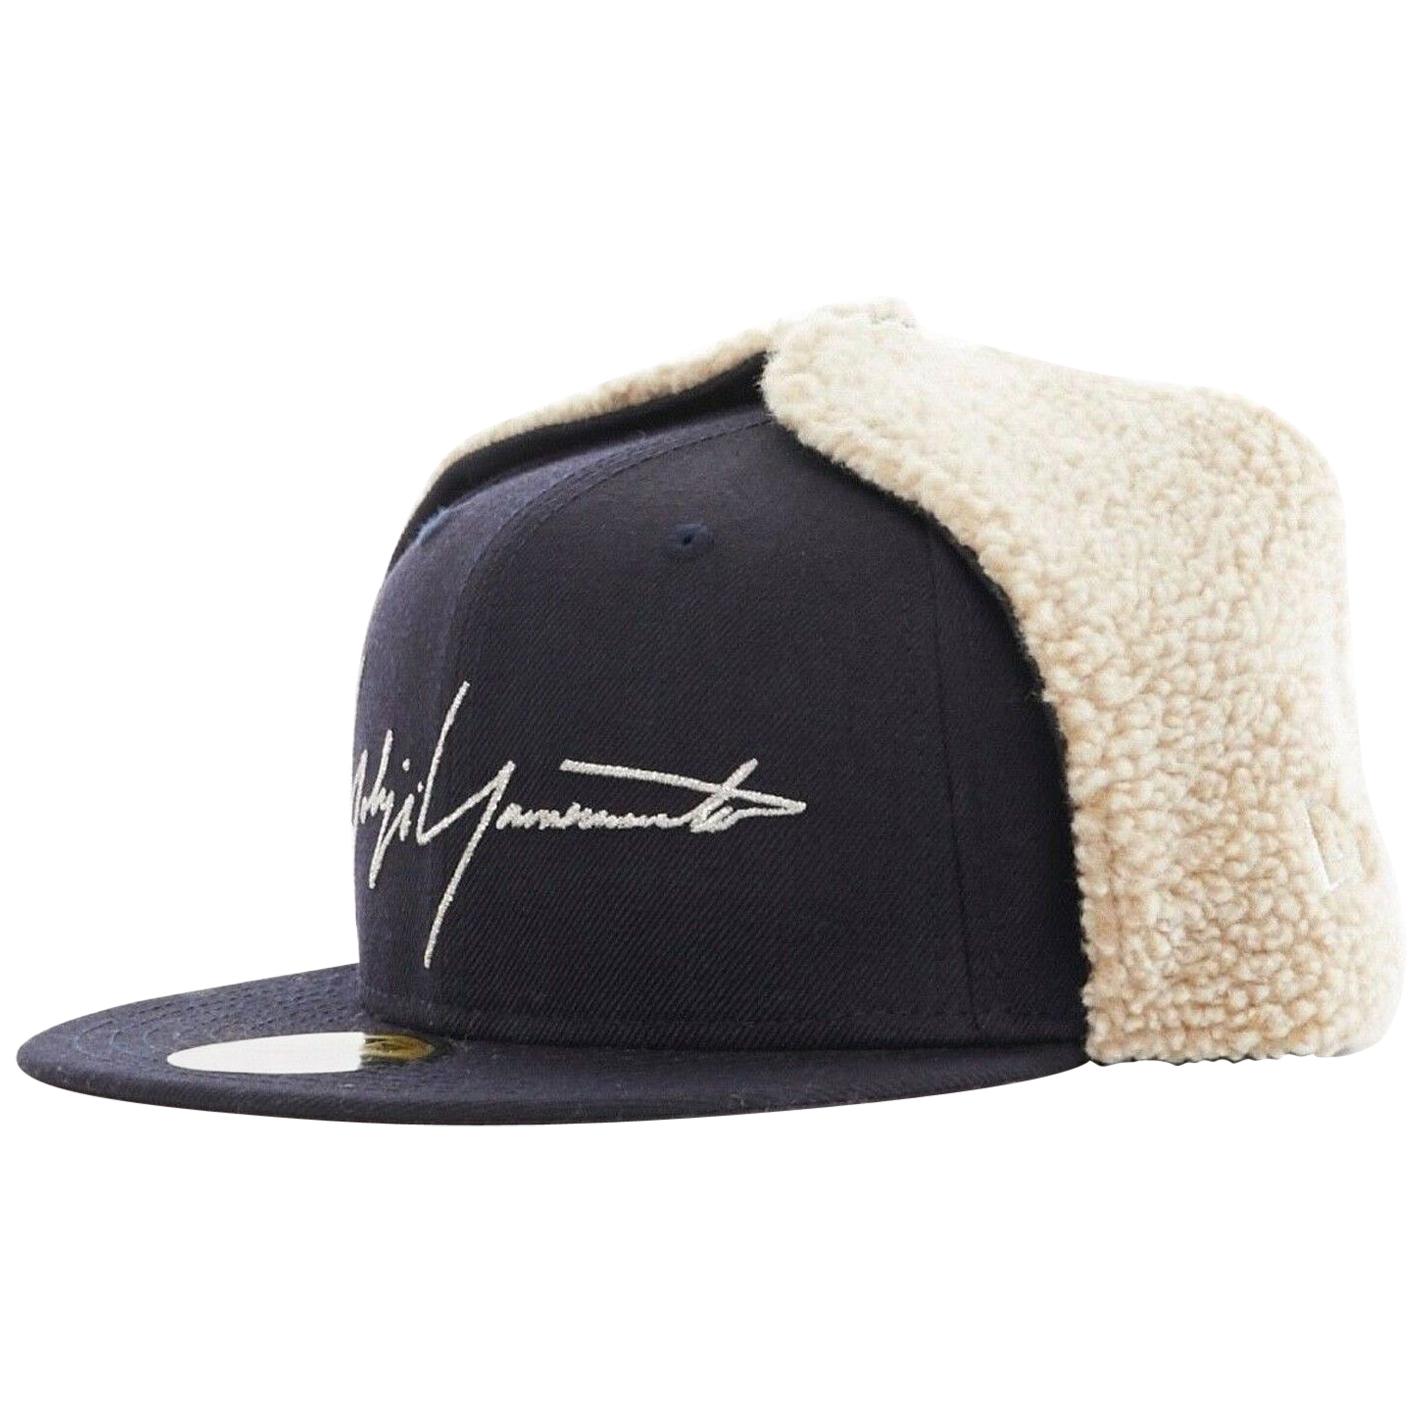 YOHJI YAMAMOTO NEW ERA logo embroidery faux shearling aviator cap hat 7 1/4